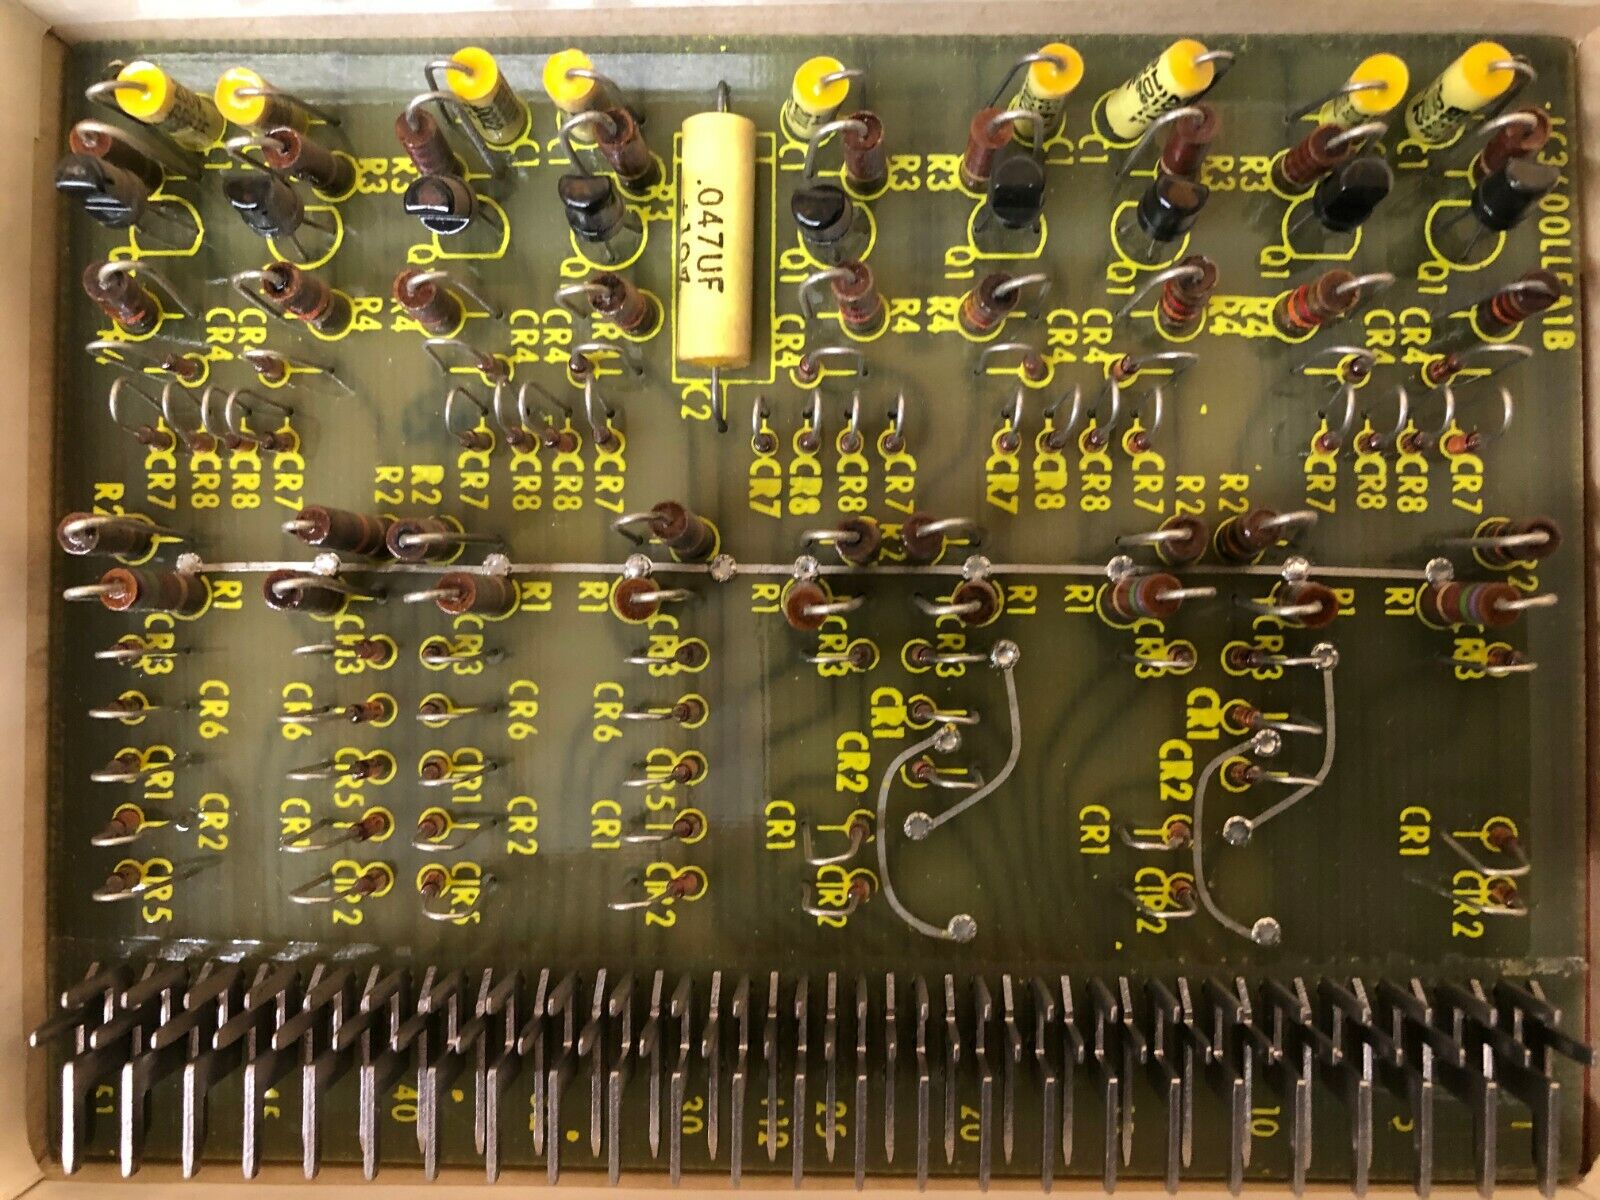 IC3600LLEA1 | General Electric Printed Circuit Board